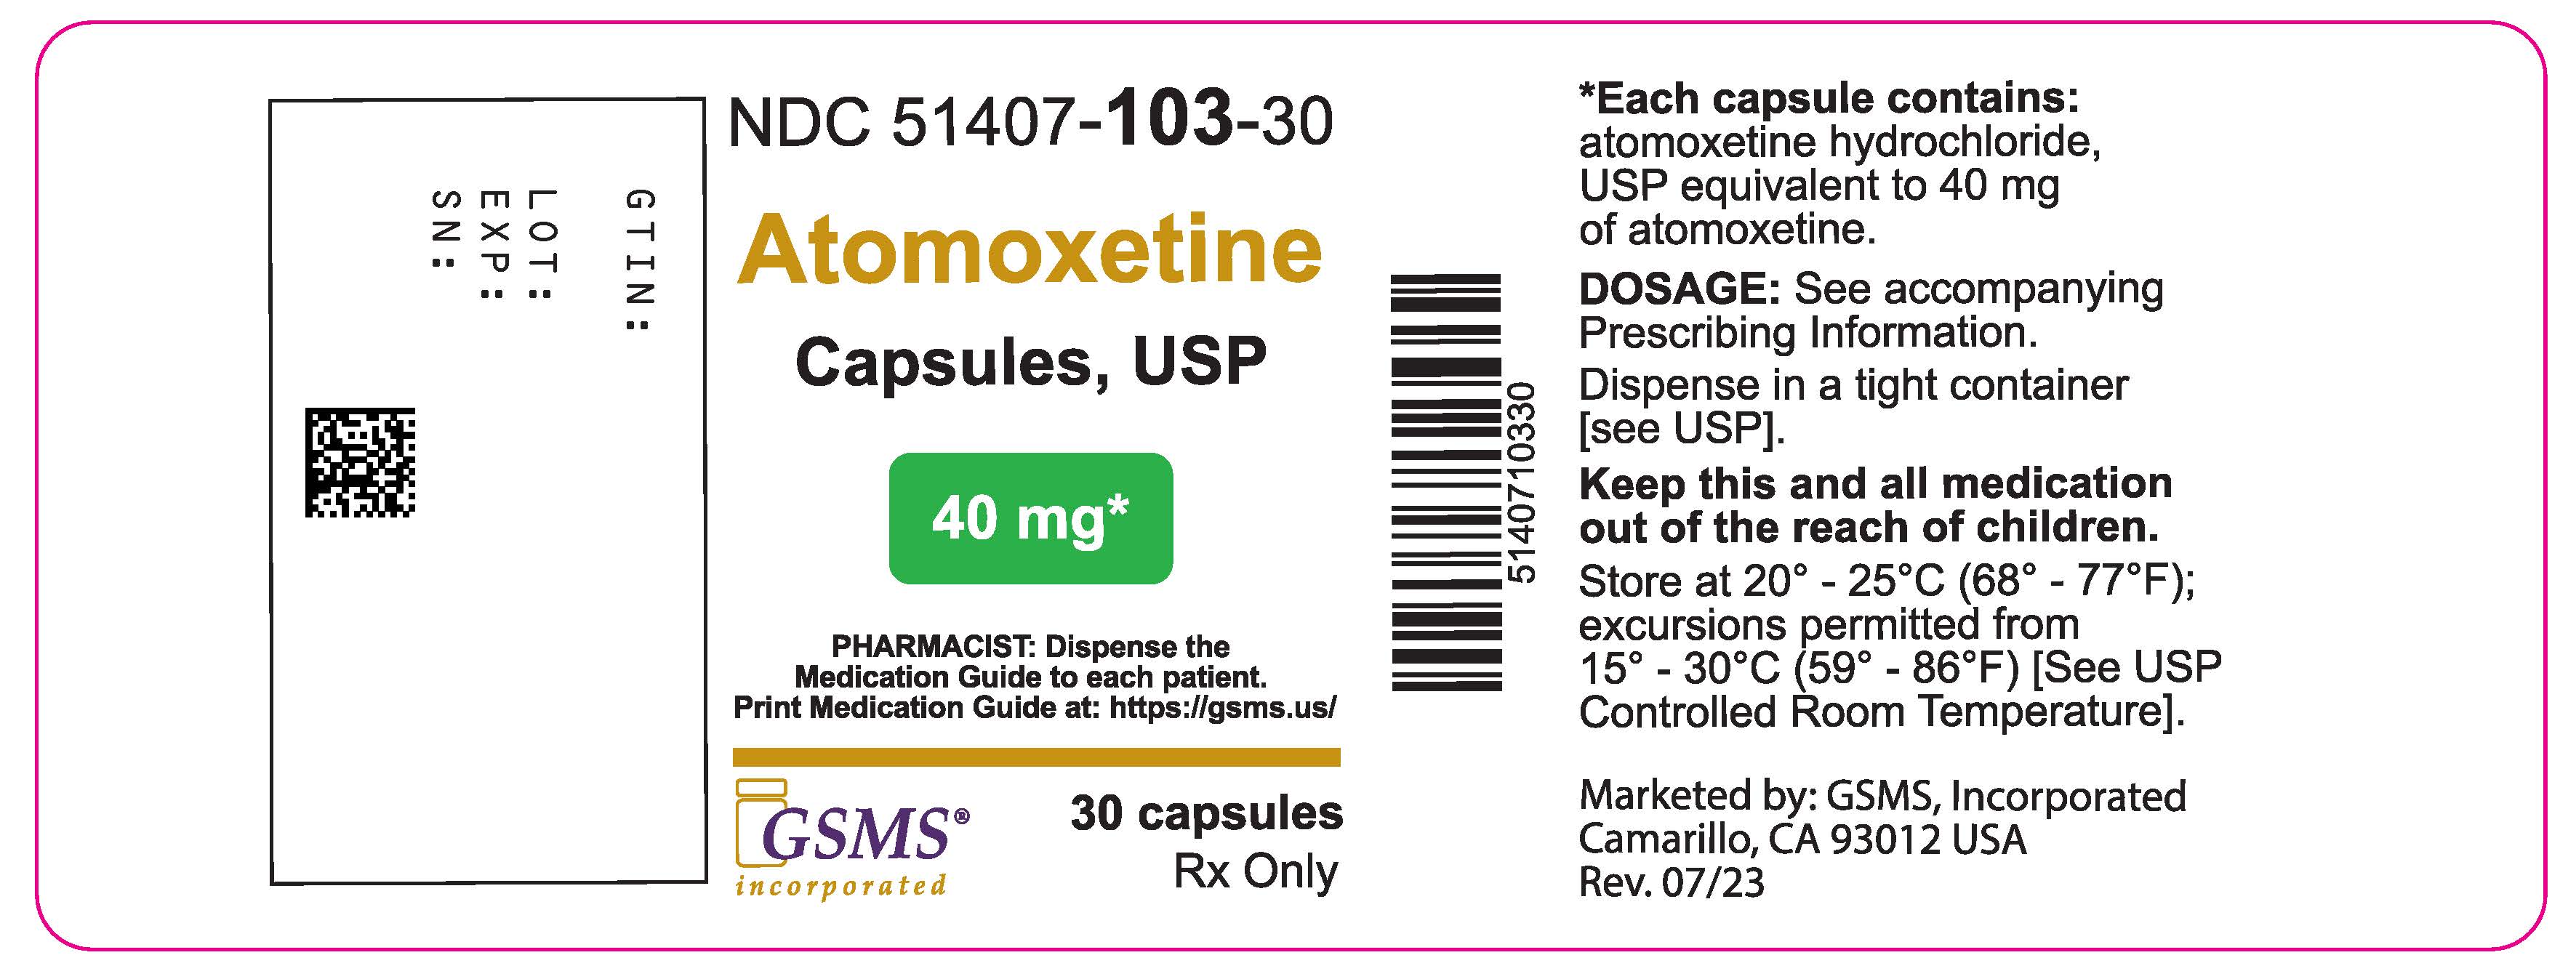 Atomoxetine Caps - 51407-103-30OL - 30ct - Rev0723.jpg